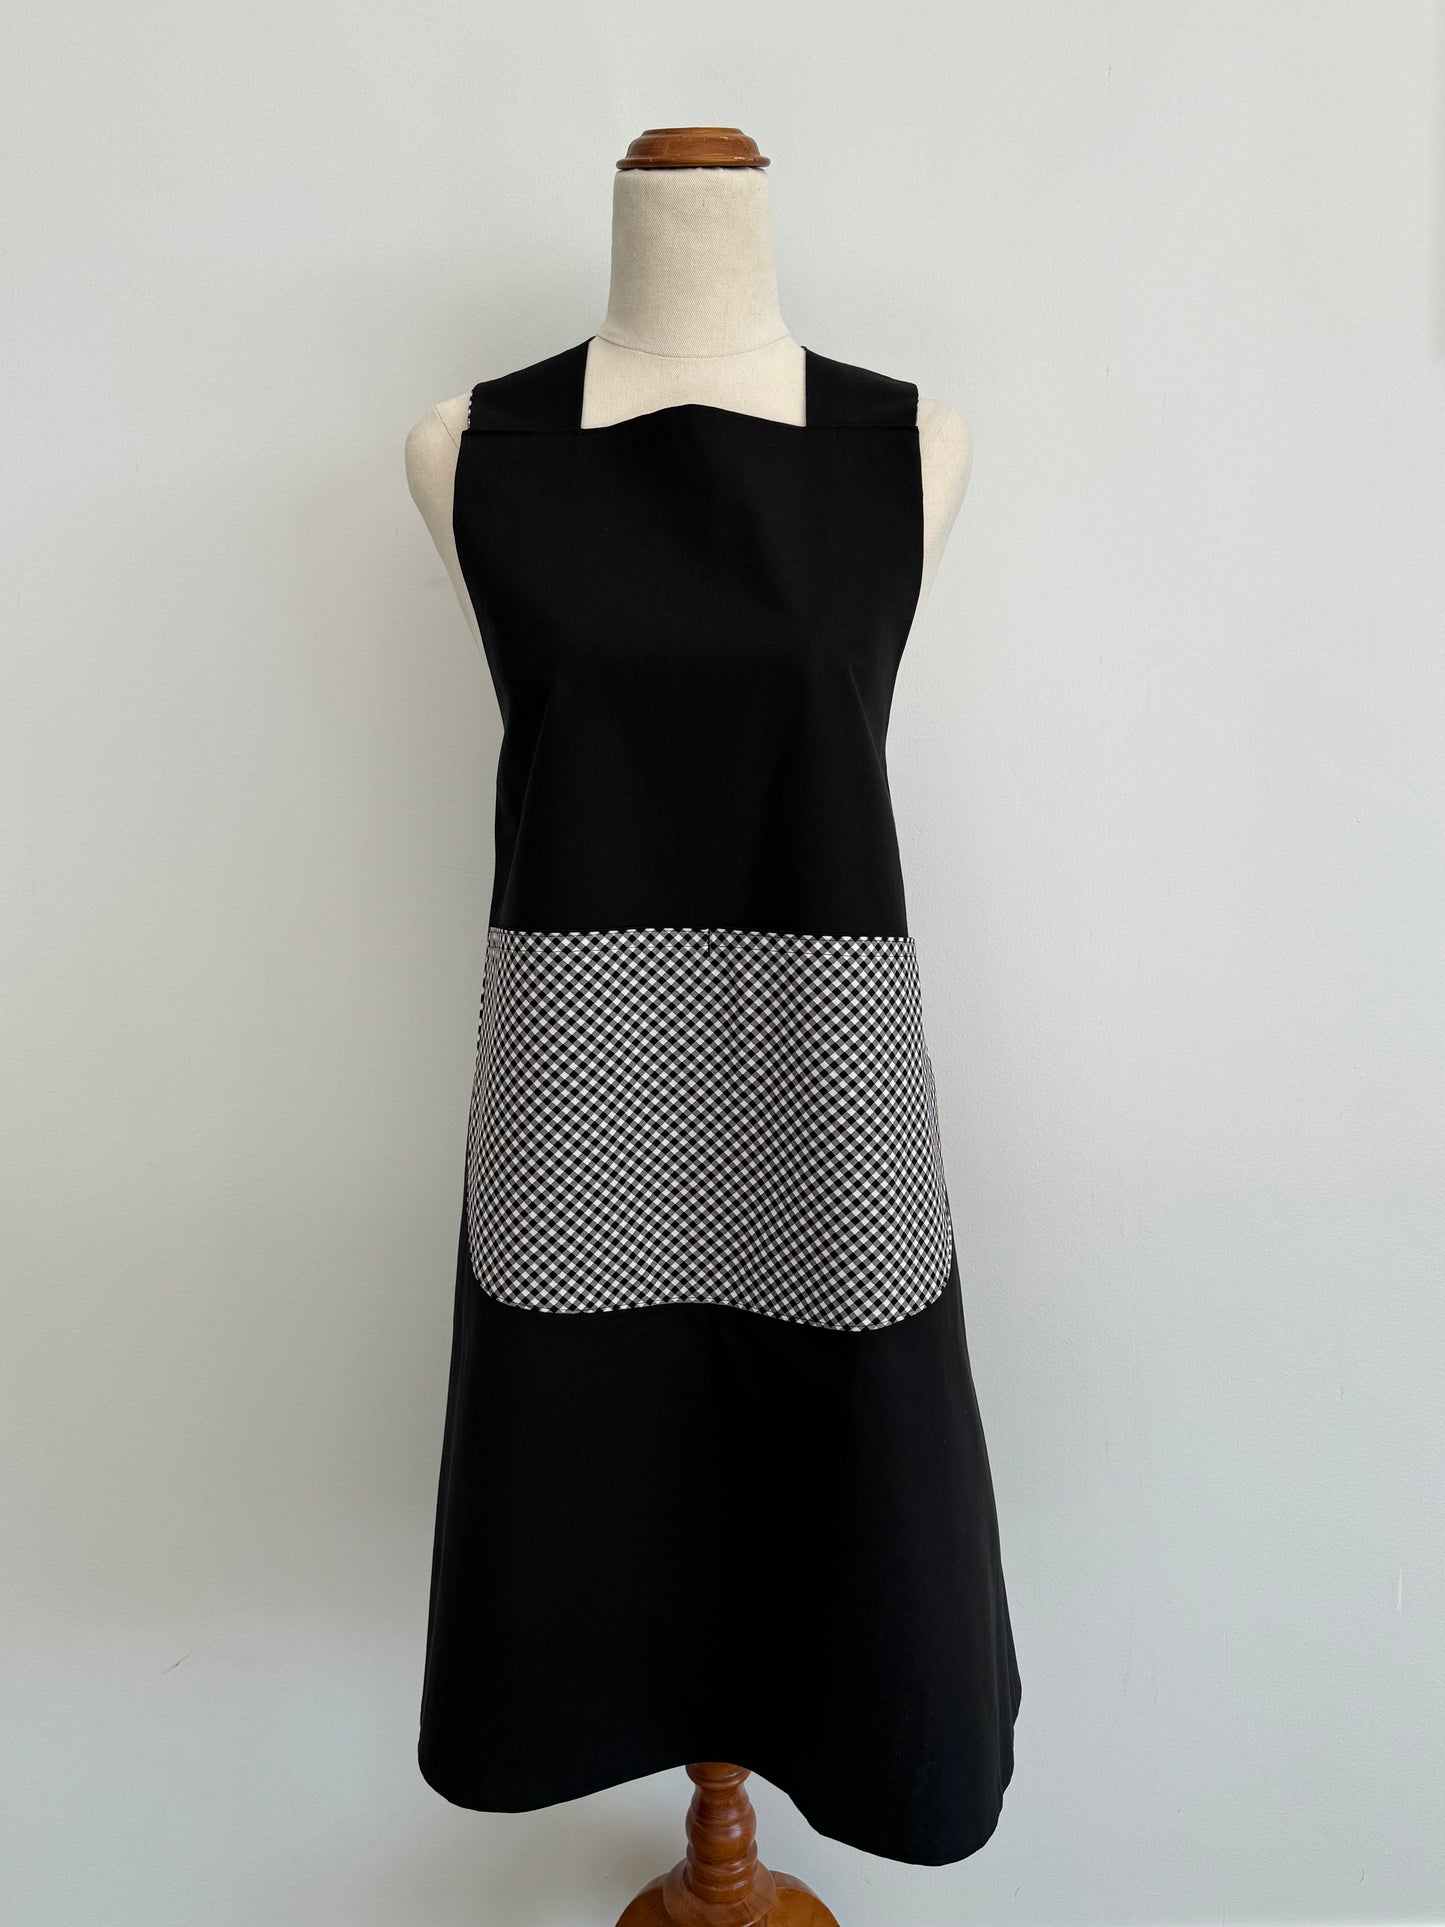 Wrap-Around Apron - Black and White Gingham Fabric